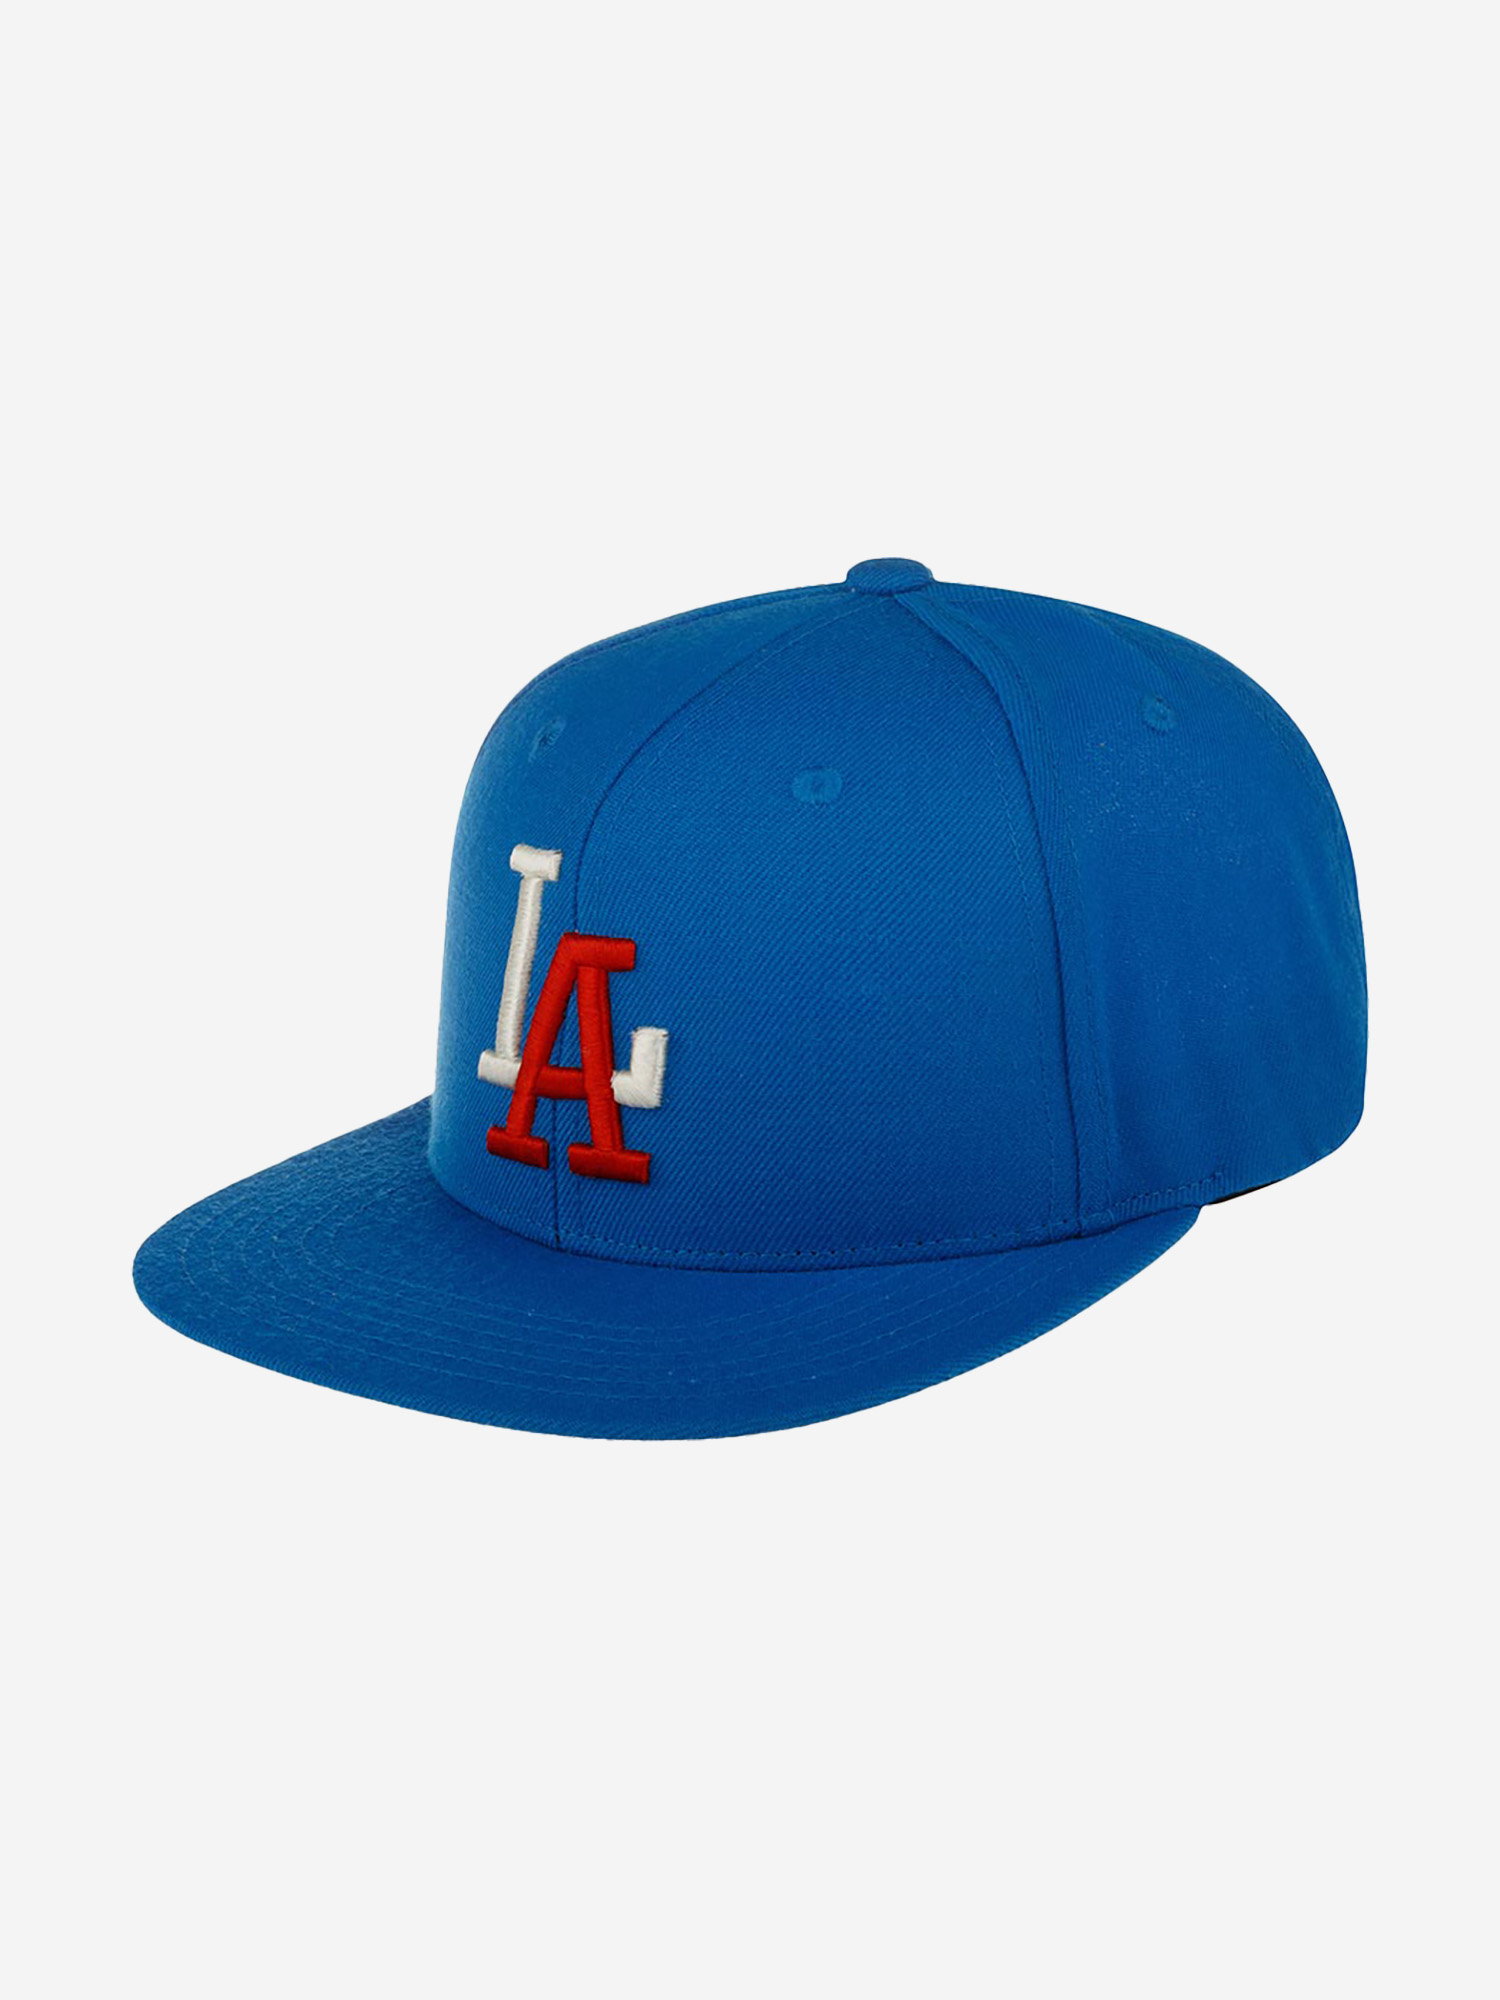 Бейсболка с прямым козырьком AMERICAN NEEDLE 21006B-LOS Los Angeles Angels Archive 400 MILB (синий), Синий